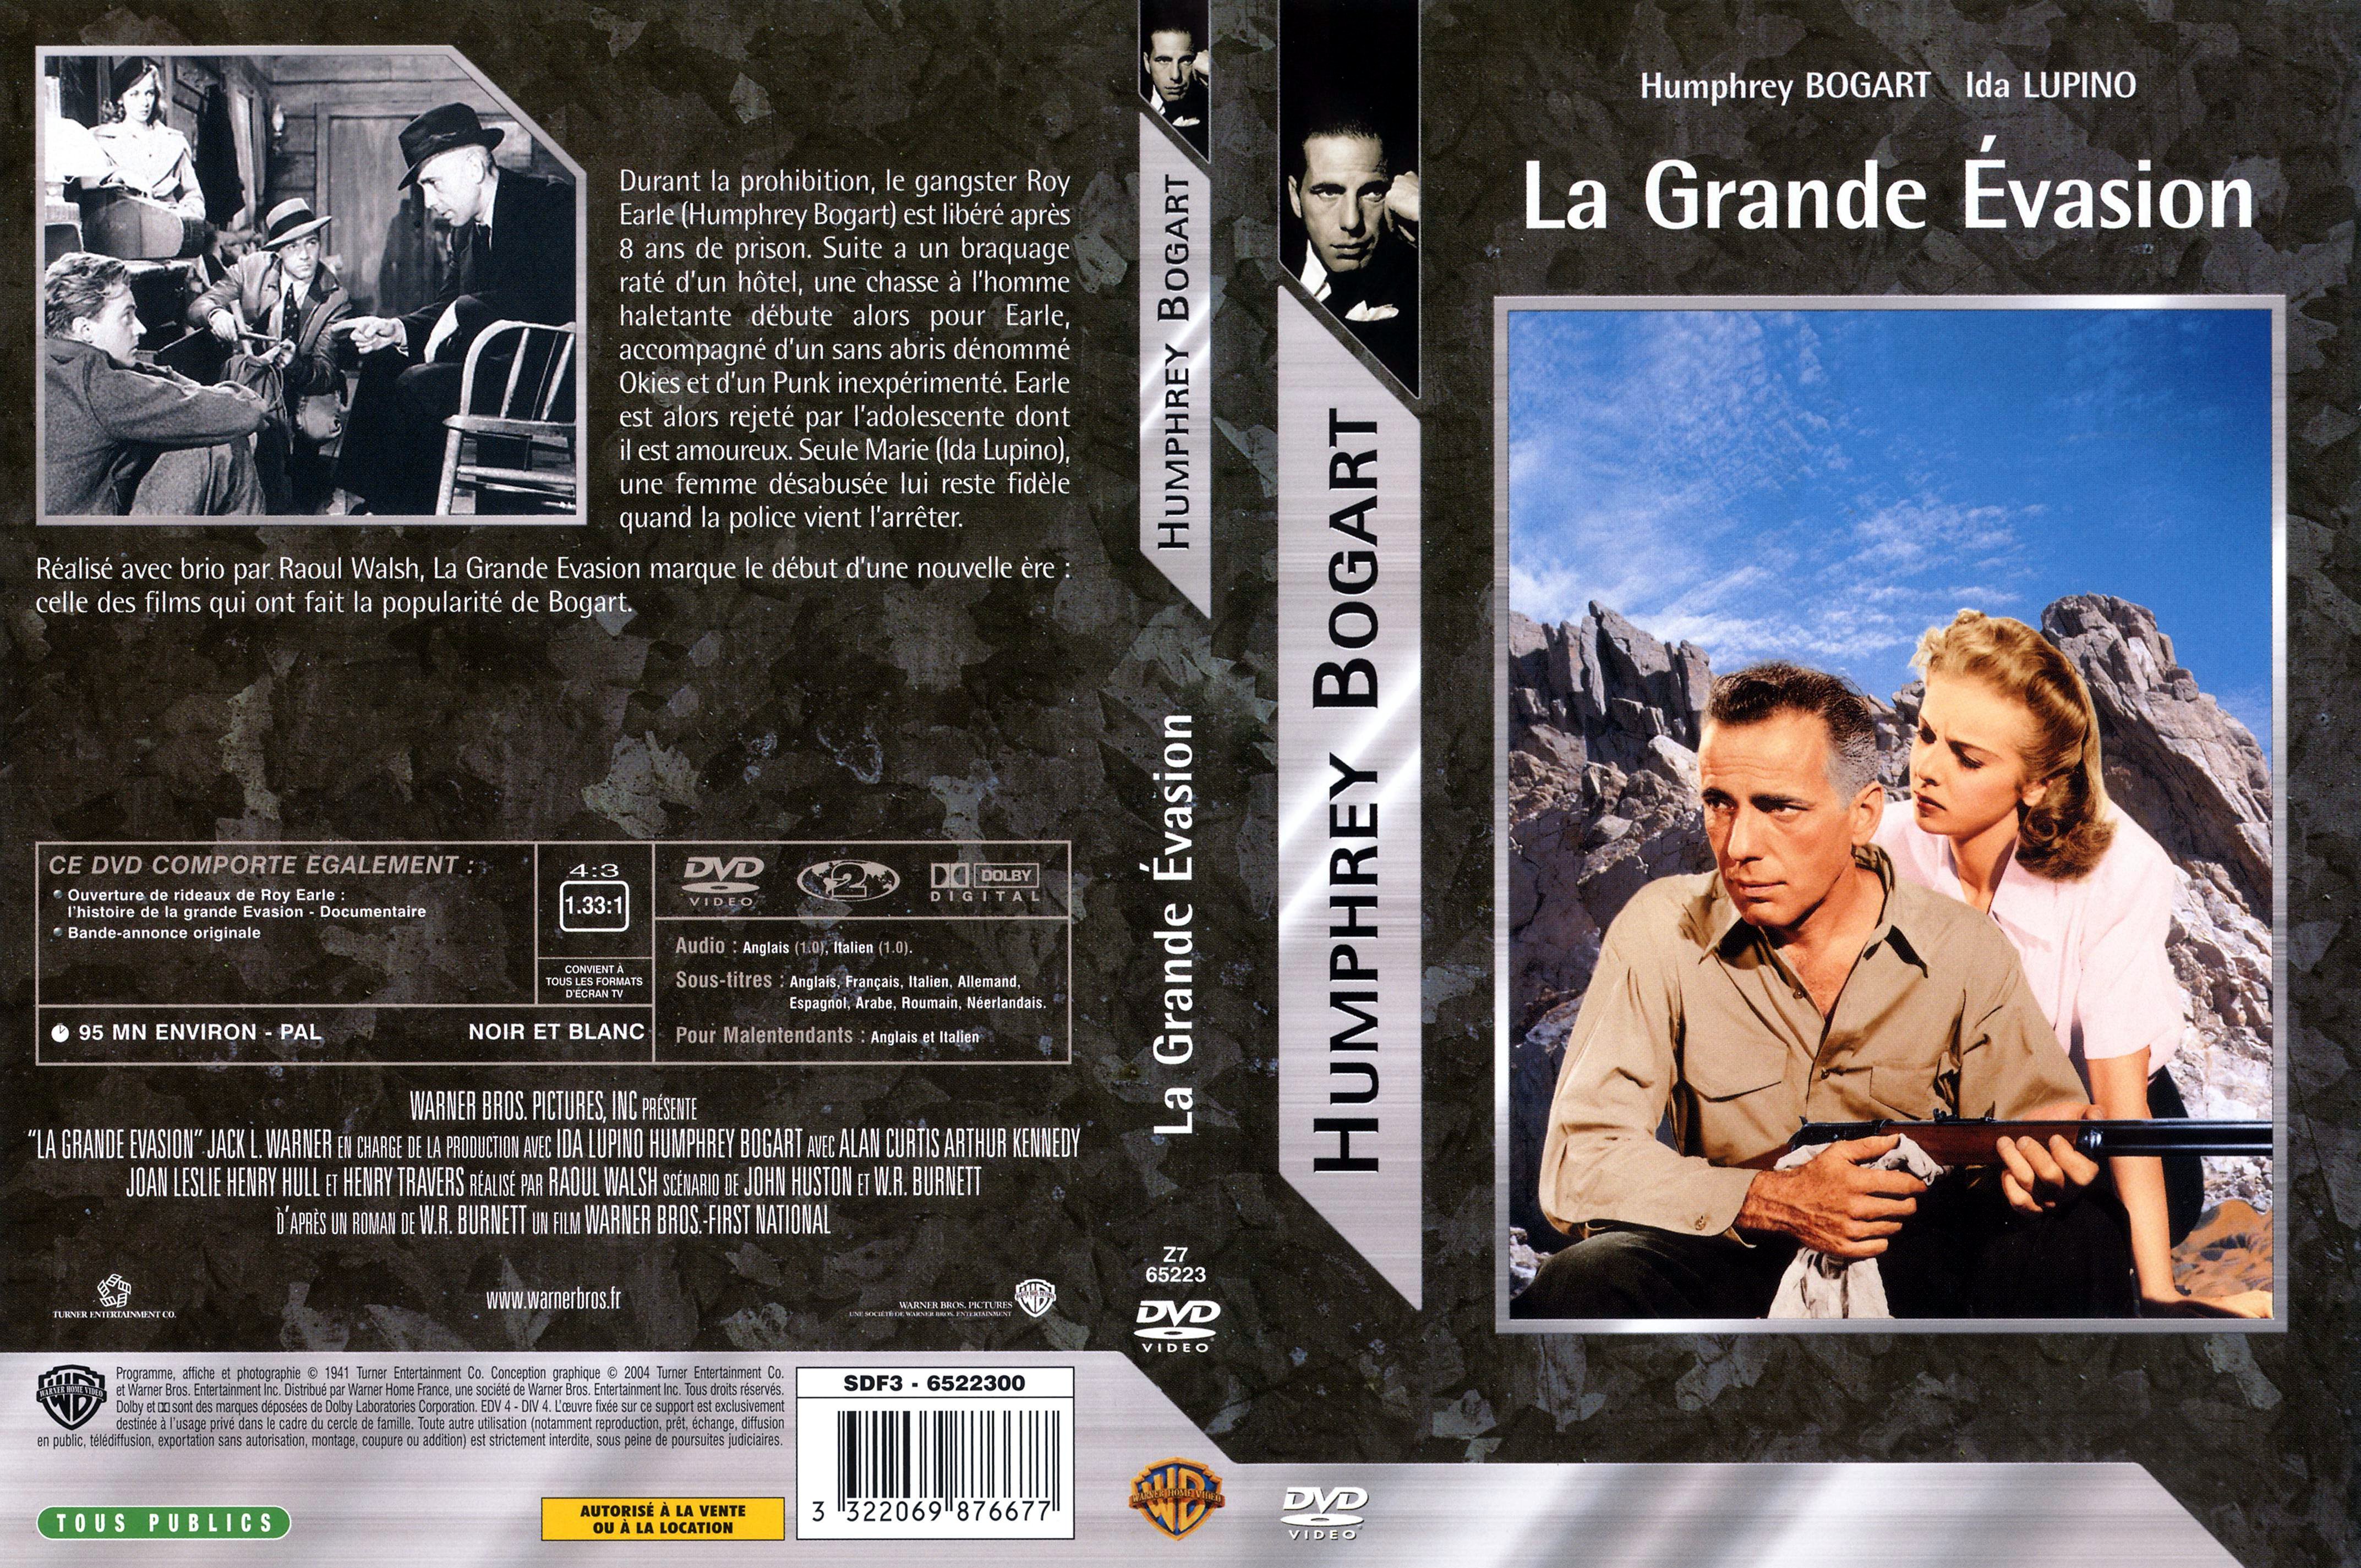 Jaquette DVD La grande evasion (1941)